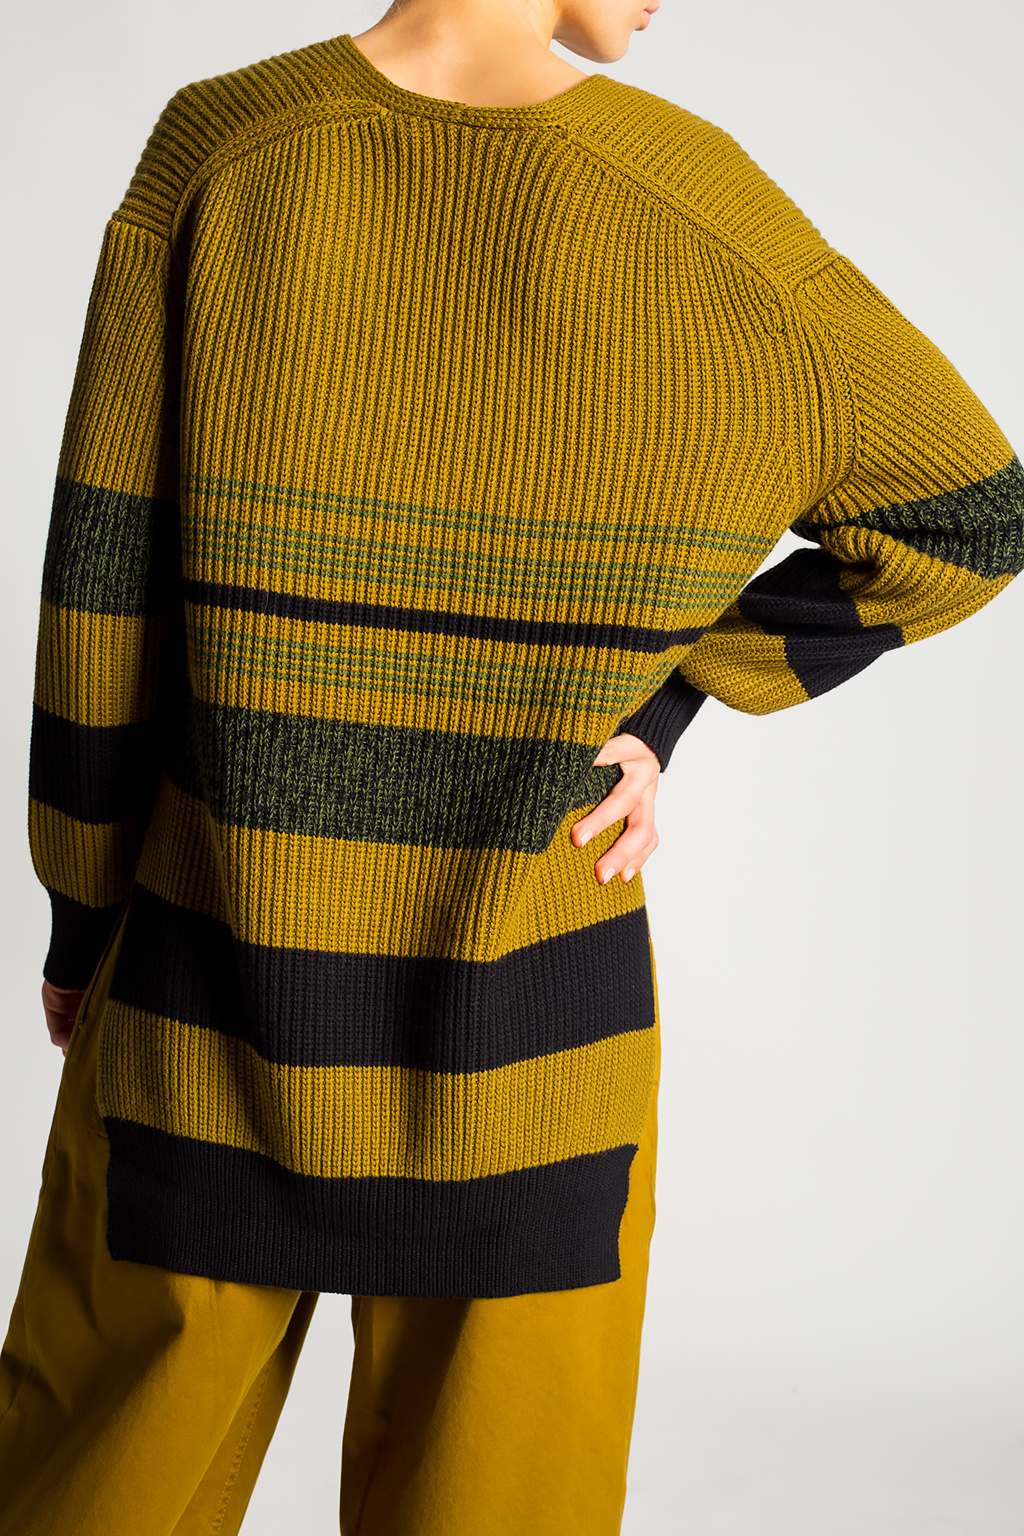 Proenza Schouler White Label Striped sweater